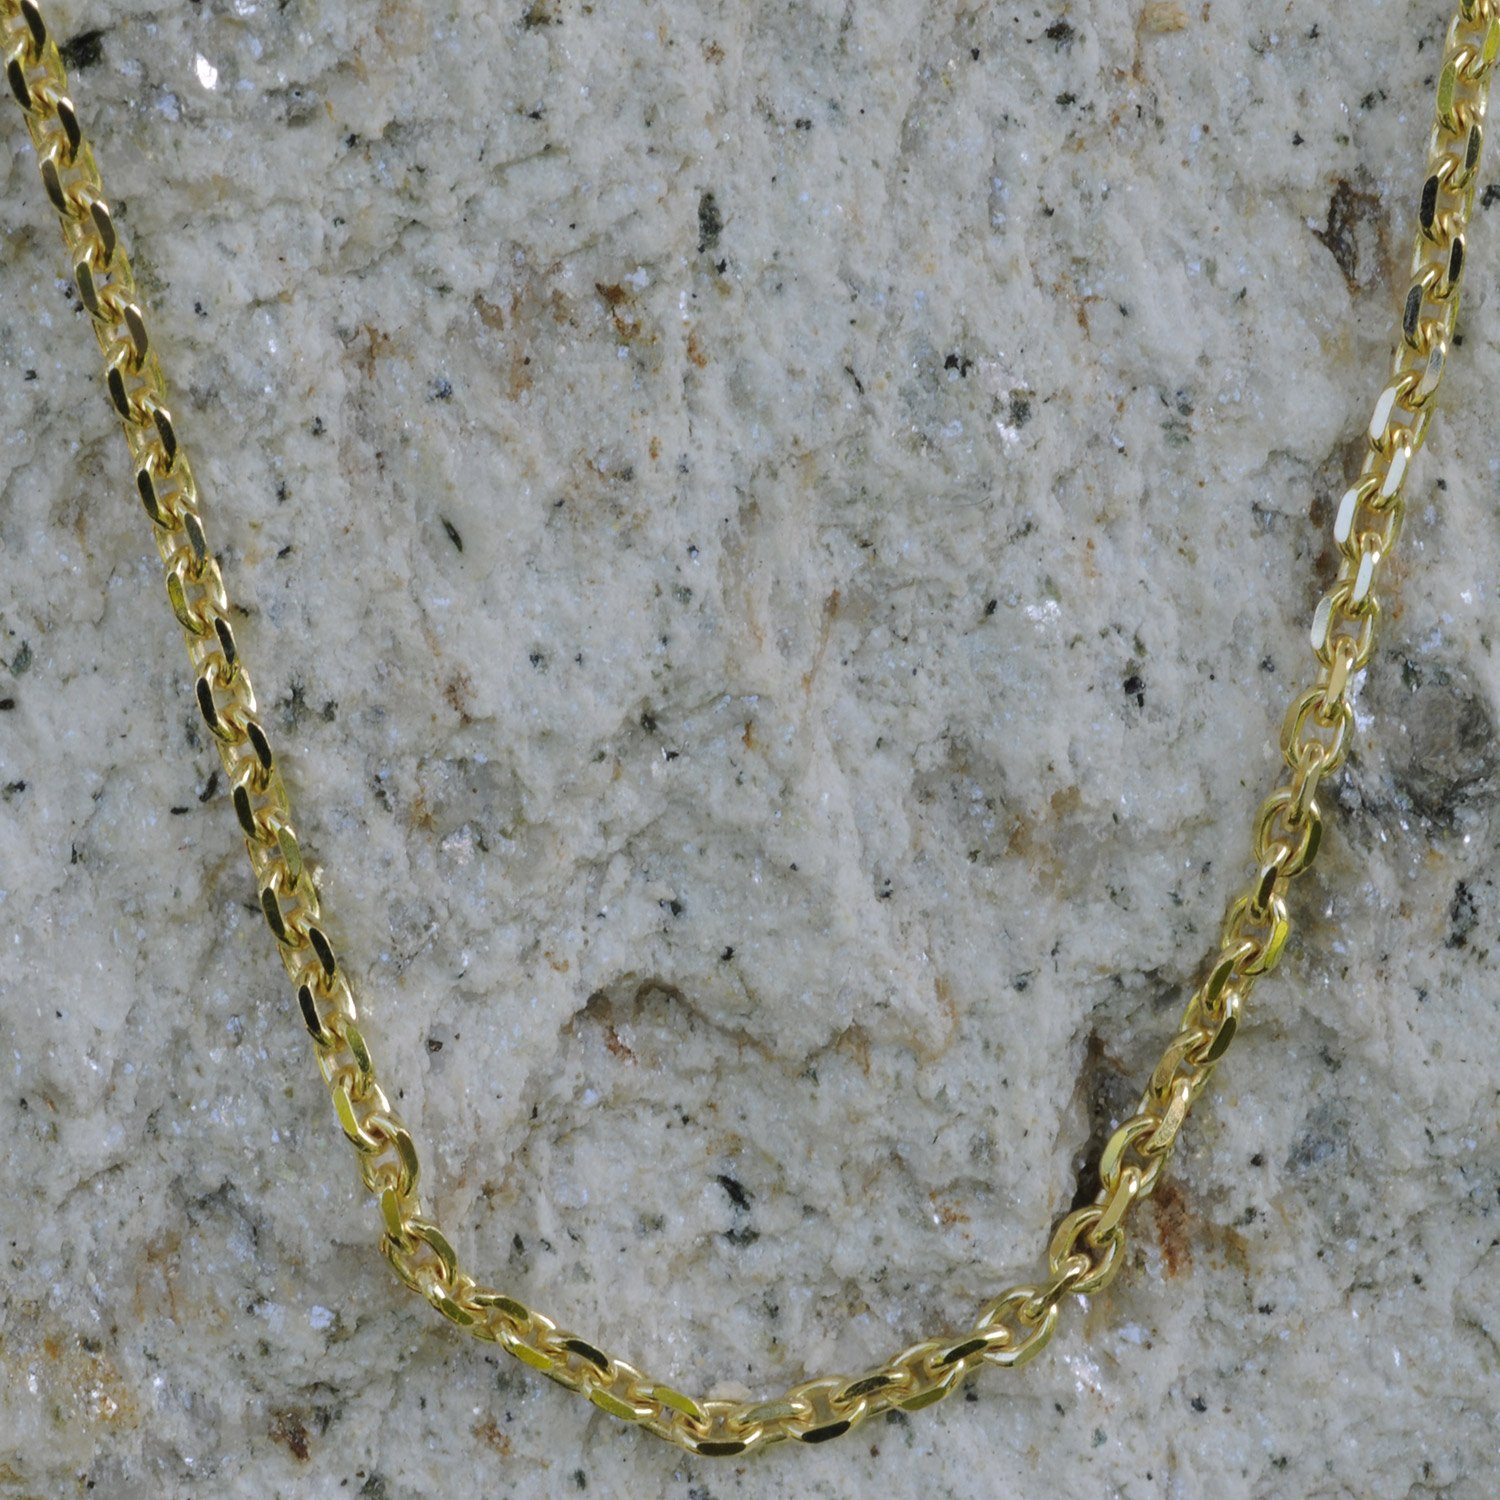 HOPLO Kettenlänge (inkl. - Schmuckbox), Made cm 333 Gold Goldkette Karat Germany mm 8 in Ankerkette diamantiert 50 1,8